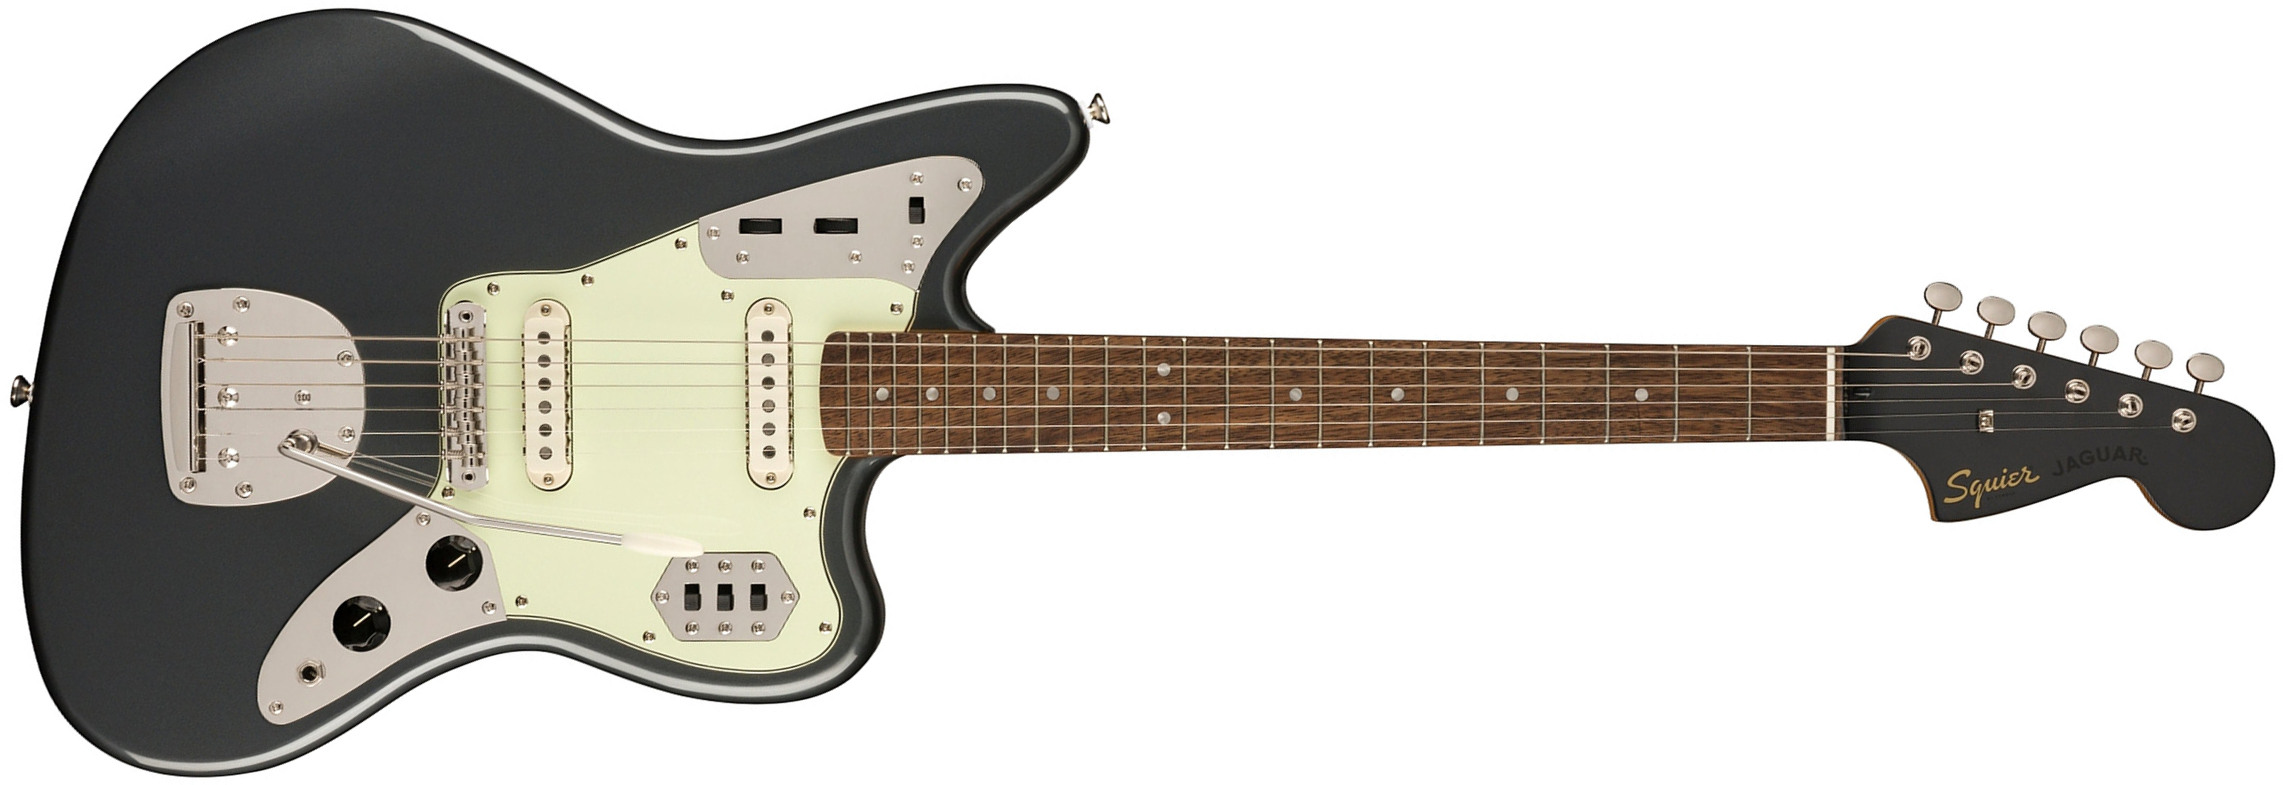 Squier Jaguar 60s Classic Vibe Fsr Ltd 2s Trem Lau - Charcoal Frost Metallic - Retro-rock elektrische gitaar - Main picture